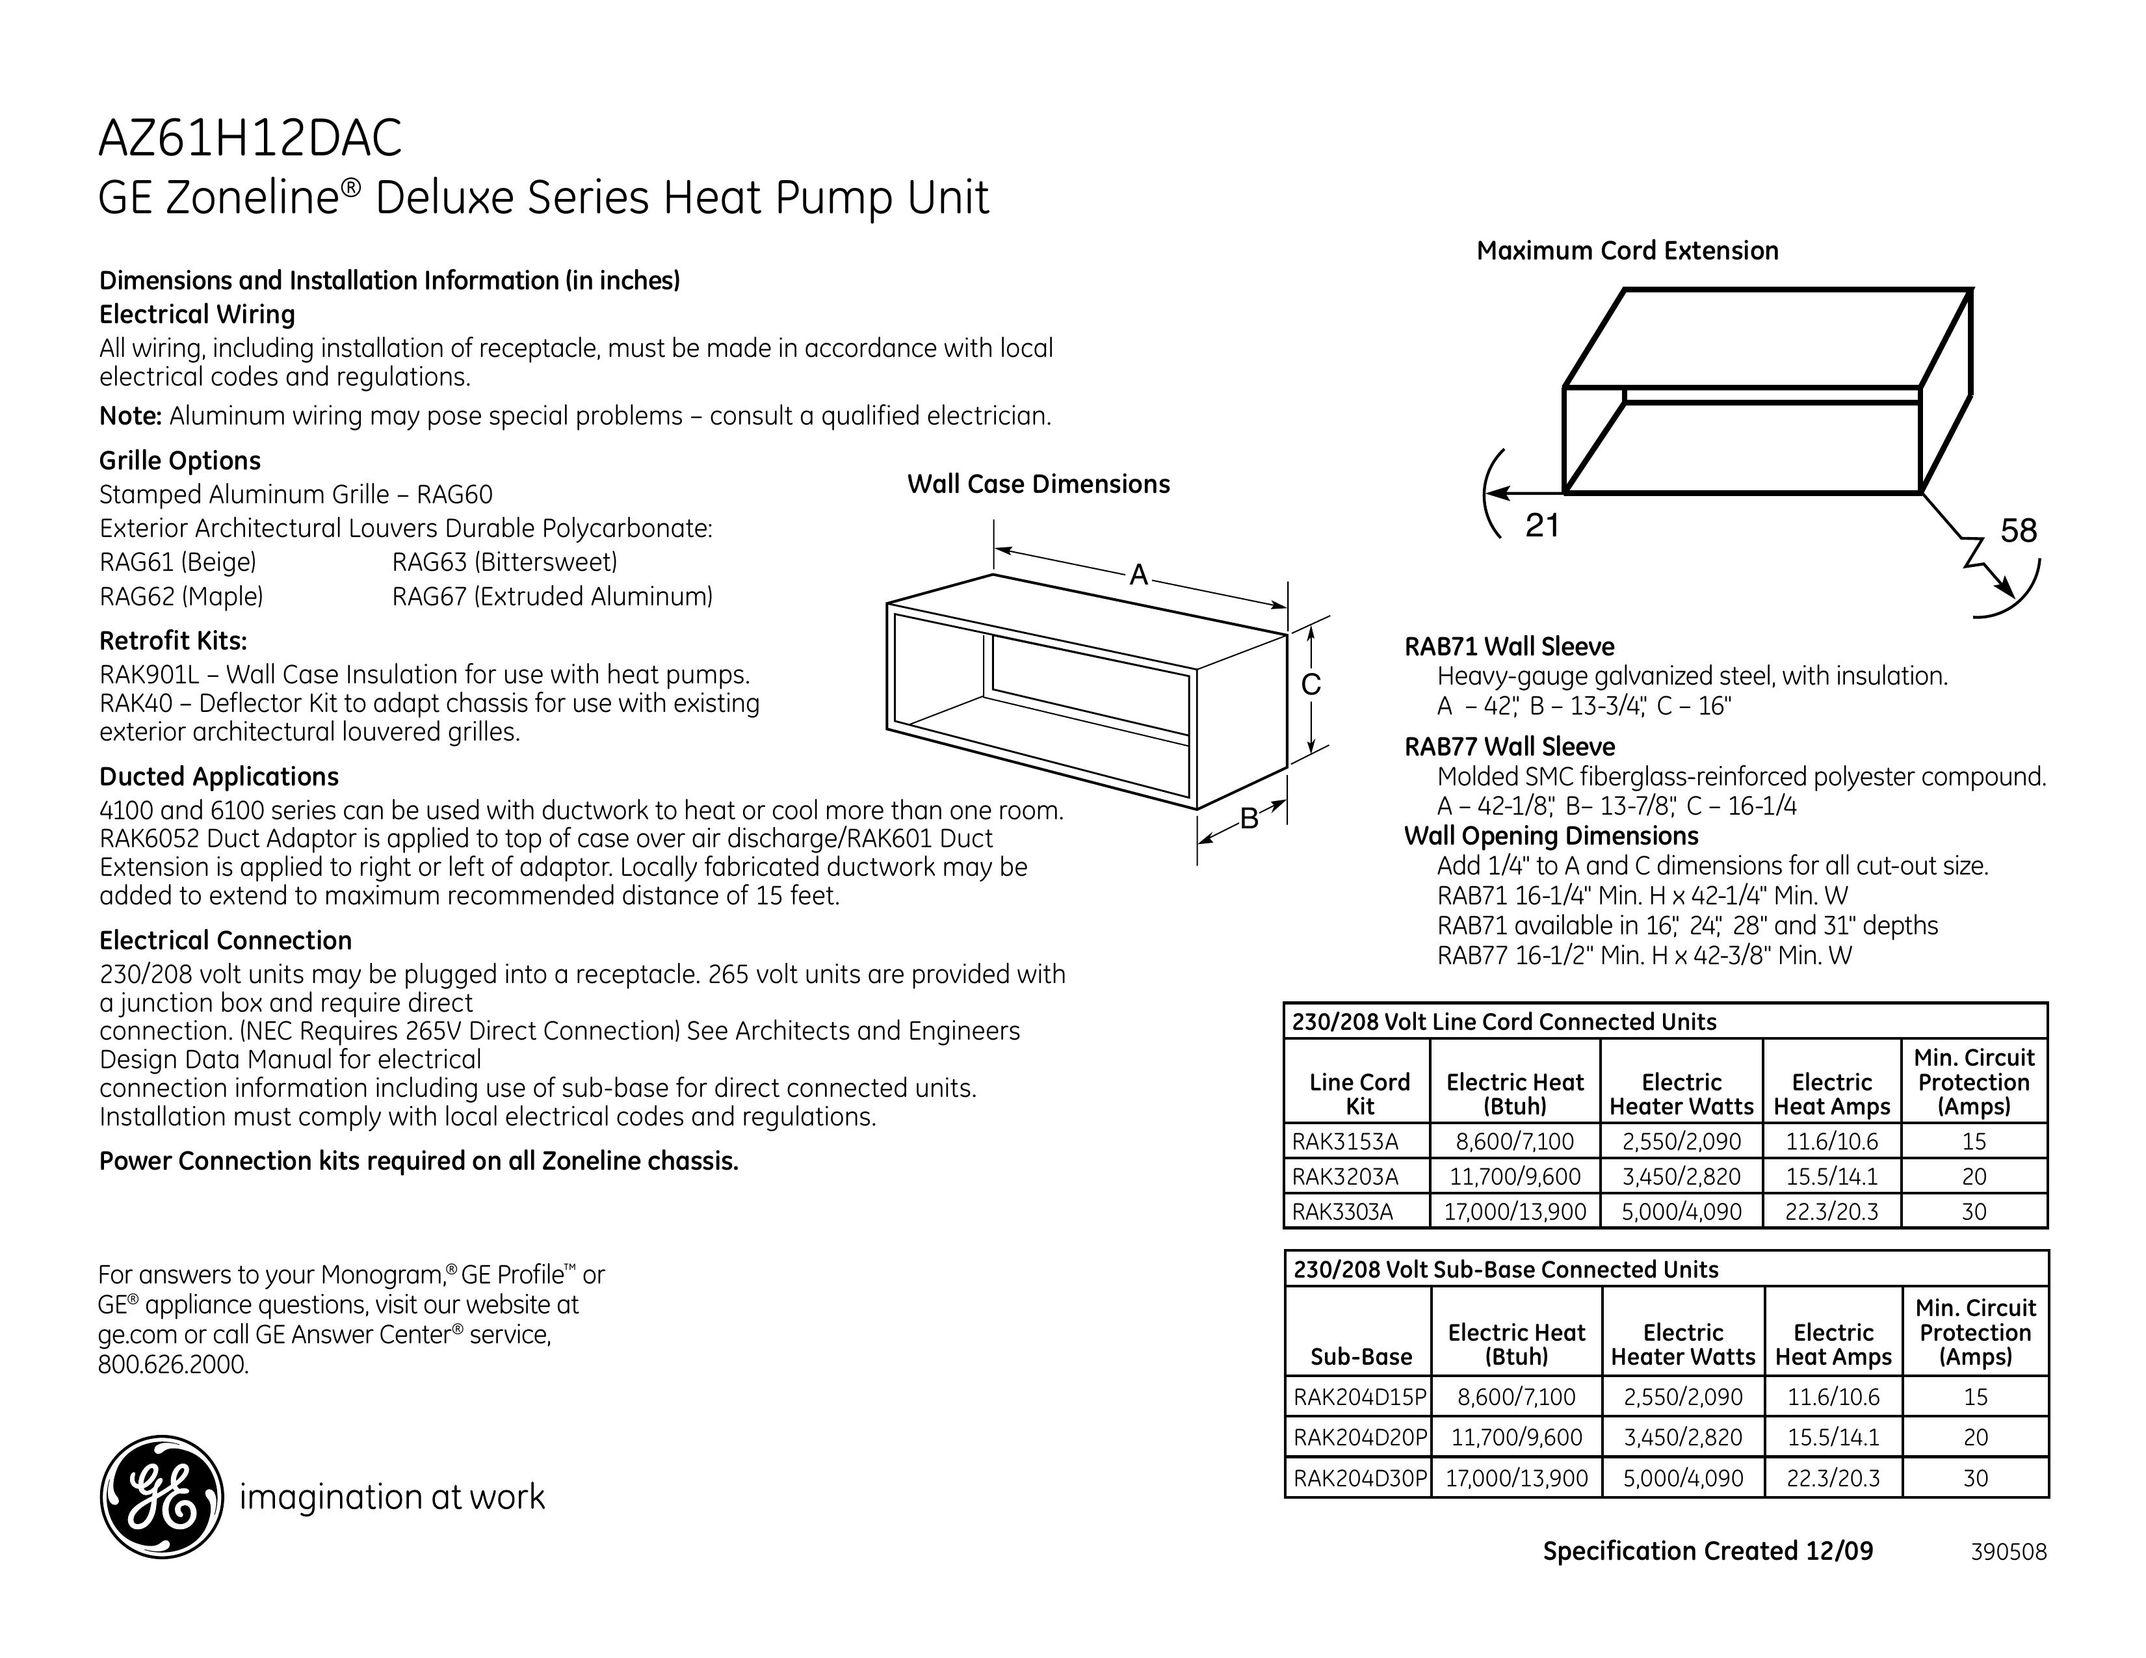 GE AZ61H12DAC Heat Pump User Manual